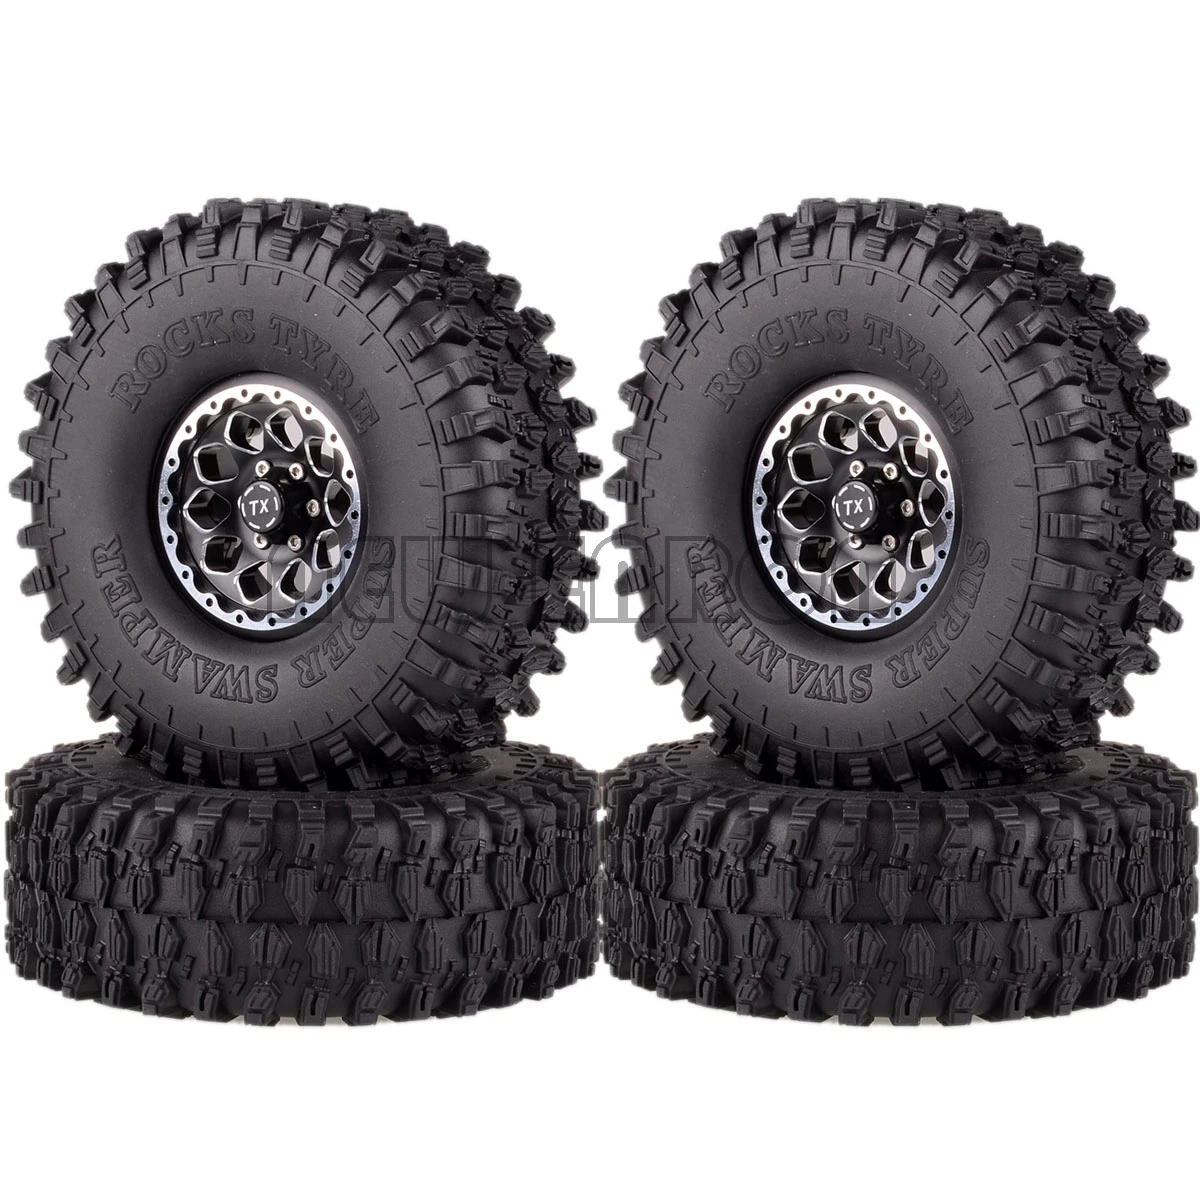 

NEW ENRON 4P 1.9" Metal Beadlock Wheel Rims &120MM Tyre Tires For RC 82046-4 TRX-4 Ford Bronco TRX4 Tamiya CC01 MST jimny D110